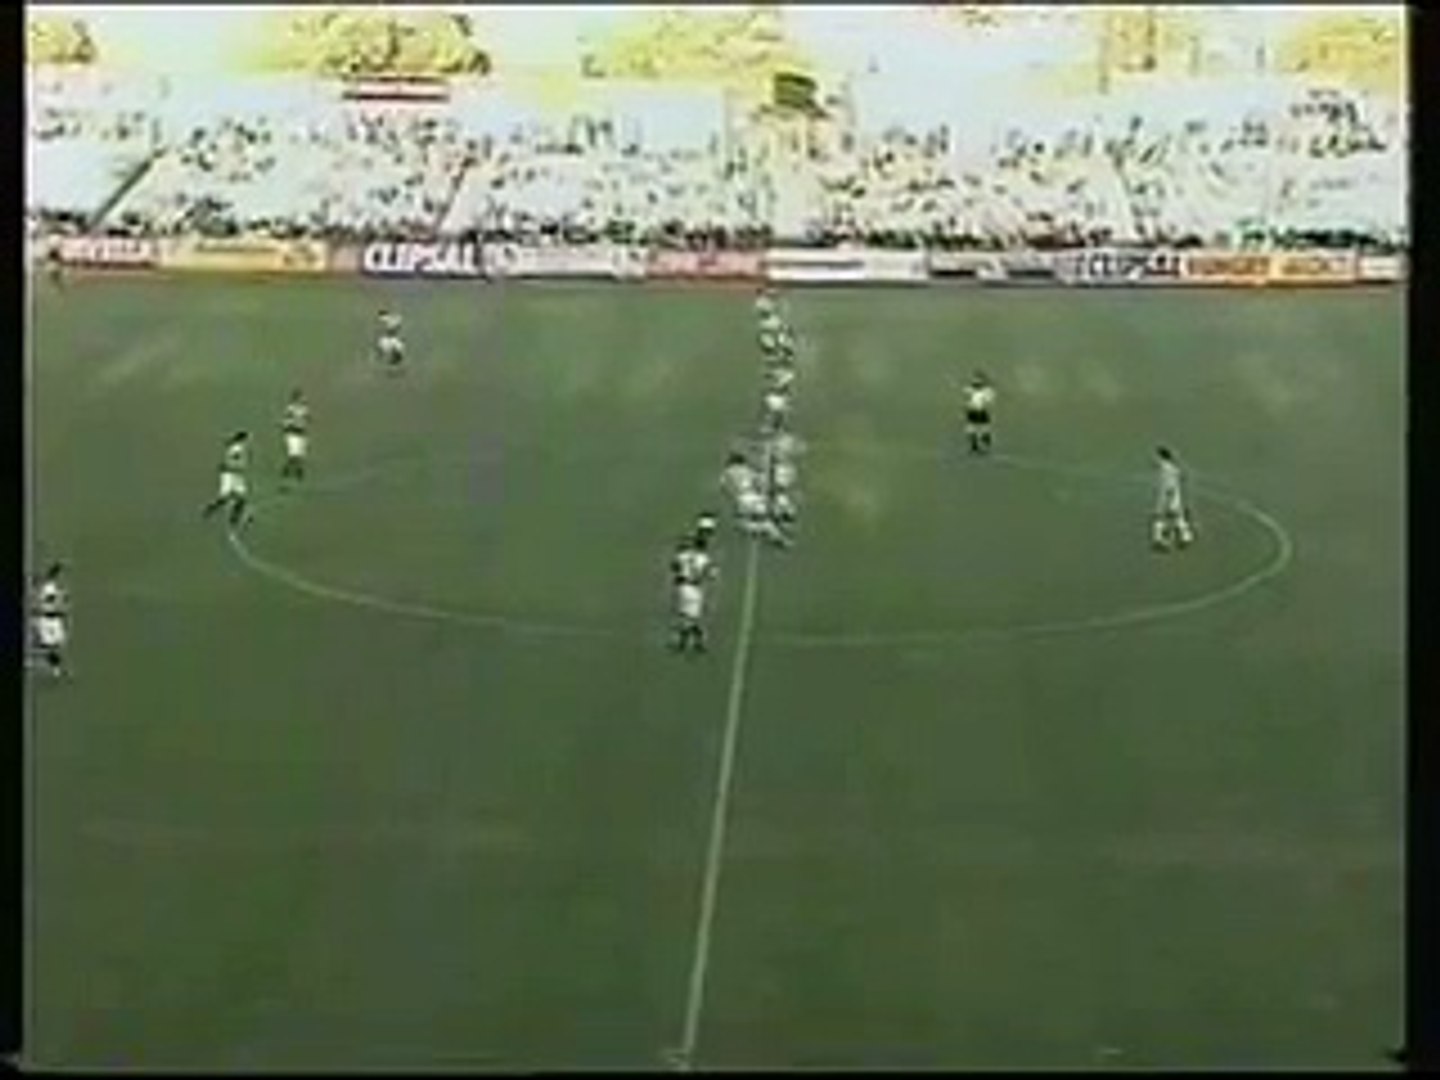 Damian Mori (Adelaide City) vs Sydney United – 3,69 giây